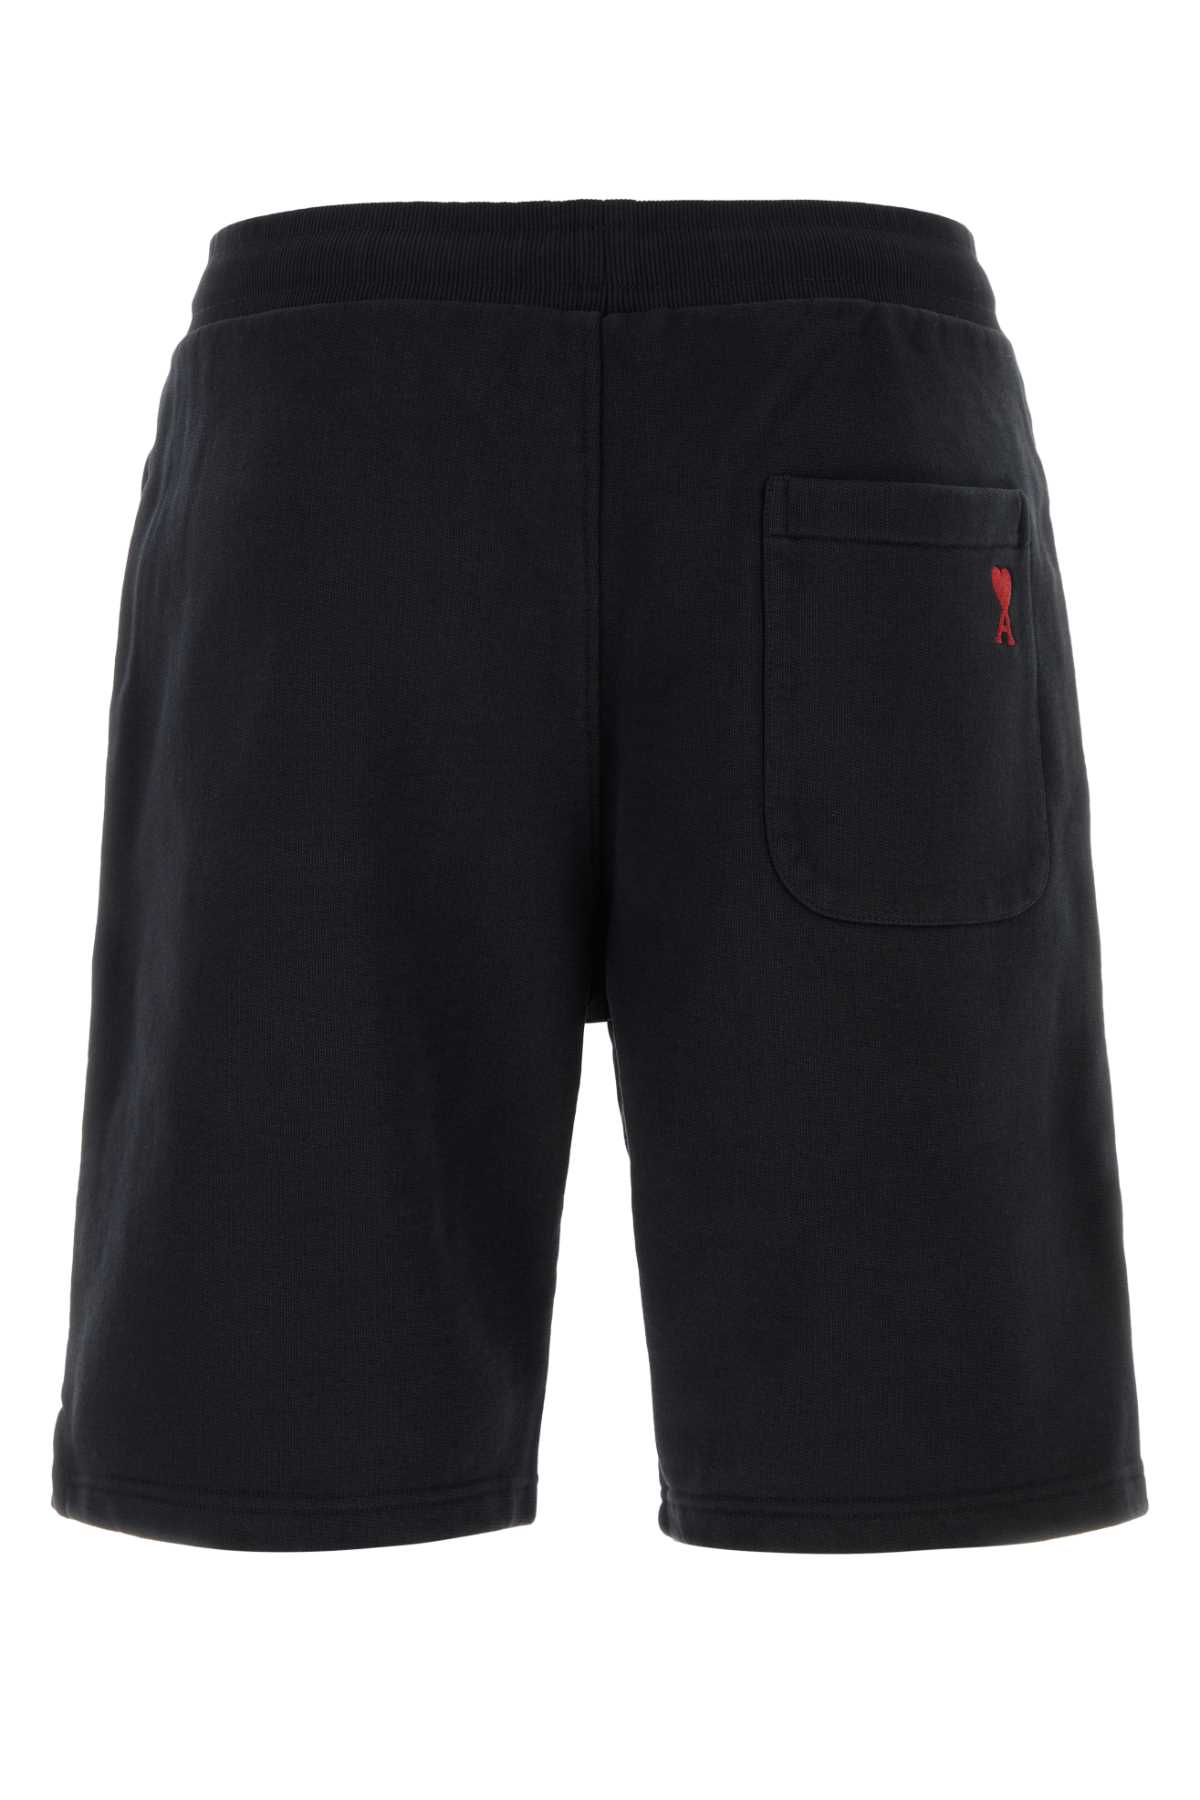 Ami Alexandre Mattiussi Black Stretch Cotton Bermuda Shorts